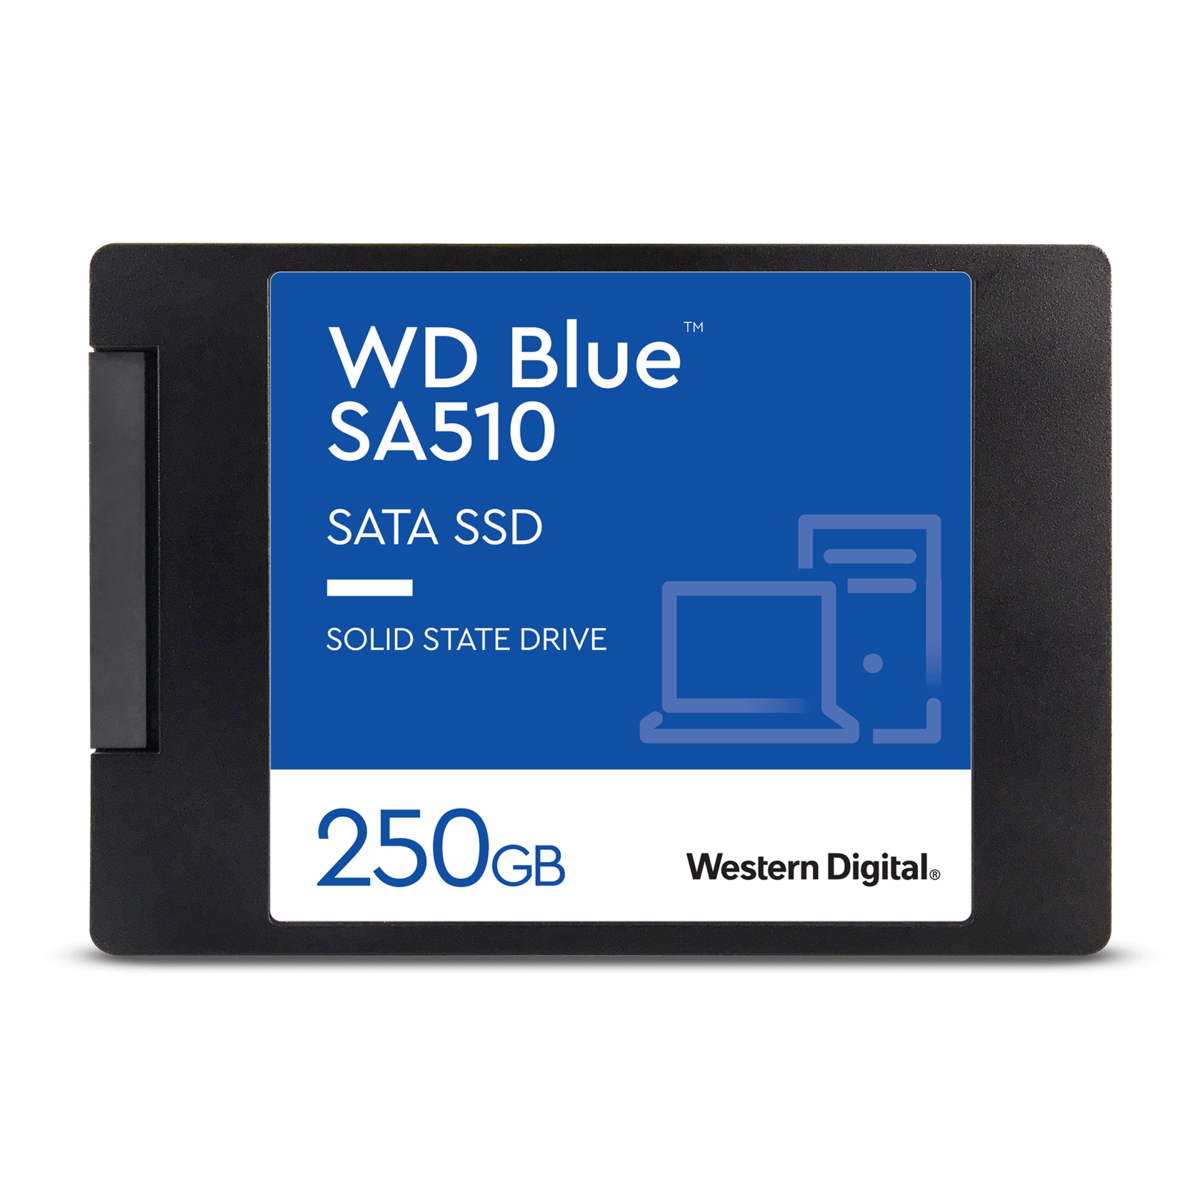 diapositiva 1 de 3, aumentar tamaño, wd blue™ sa510 sata ssd - 250gb